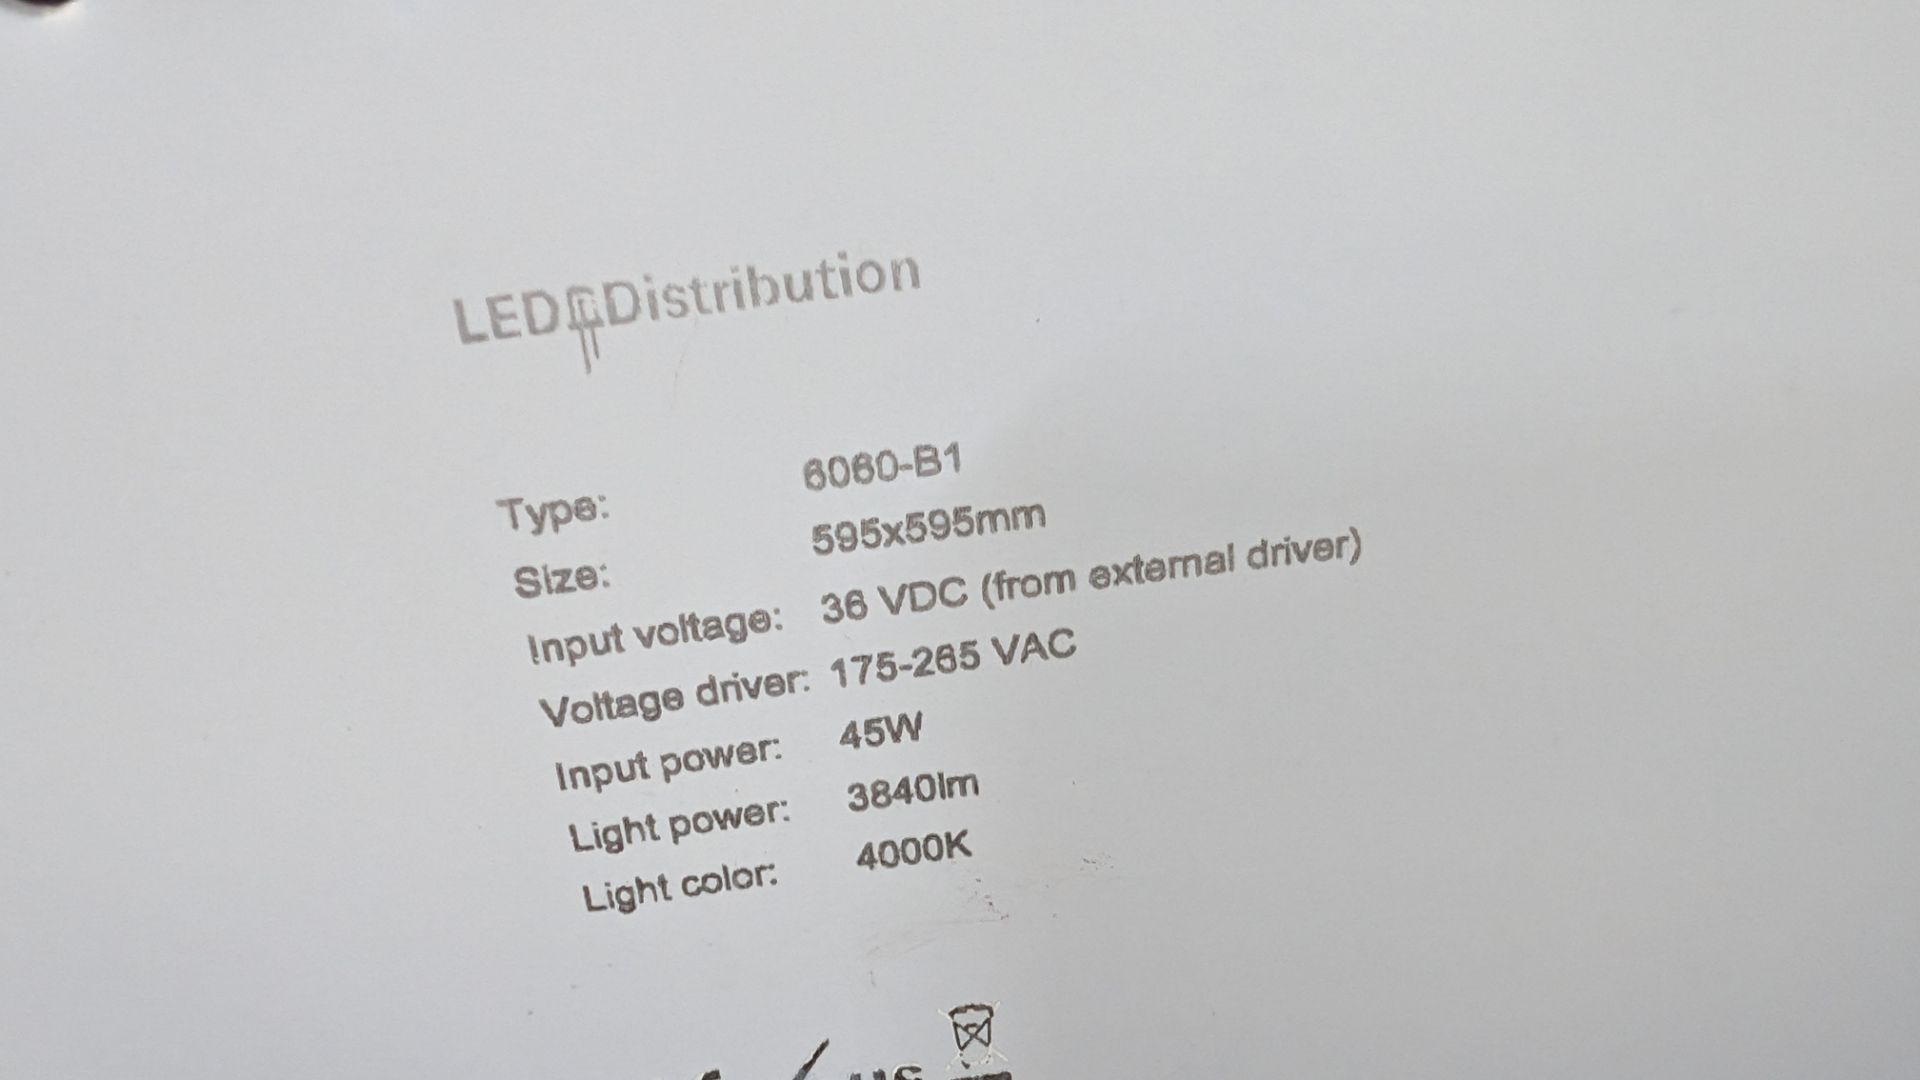 20 off Elegance (Standard) 595mm x 595mm LED lighting panels. 4000k. 45w input power. 45w drivers - Image 9 of 14